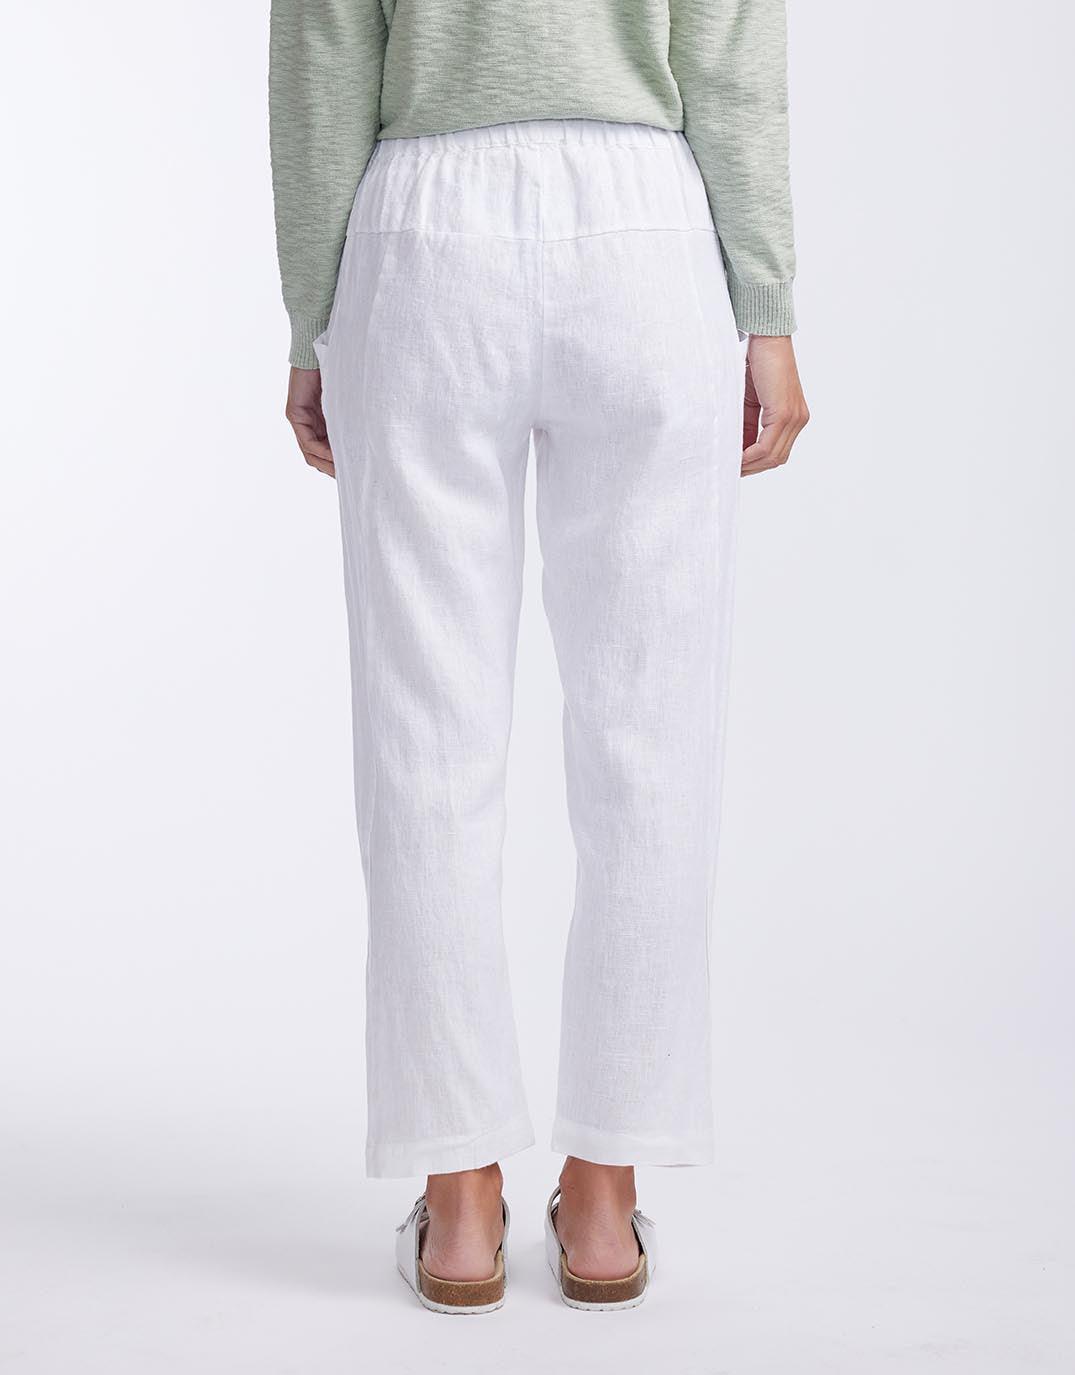 Little Lies - Luxe Linen Pants - White - White & Co Living Pants